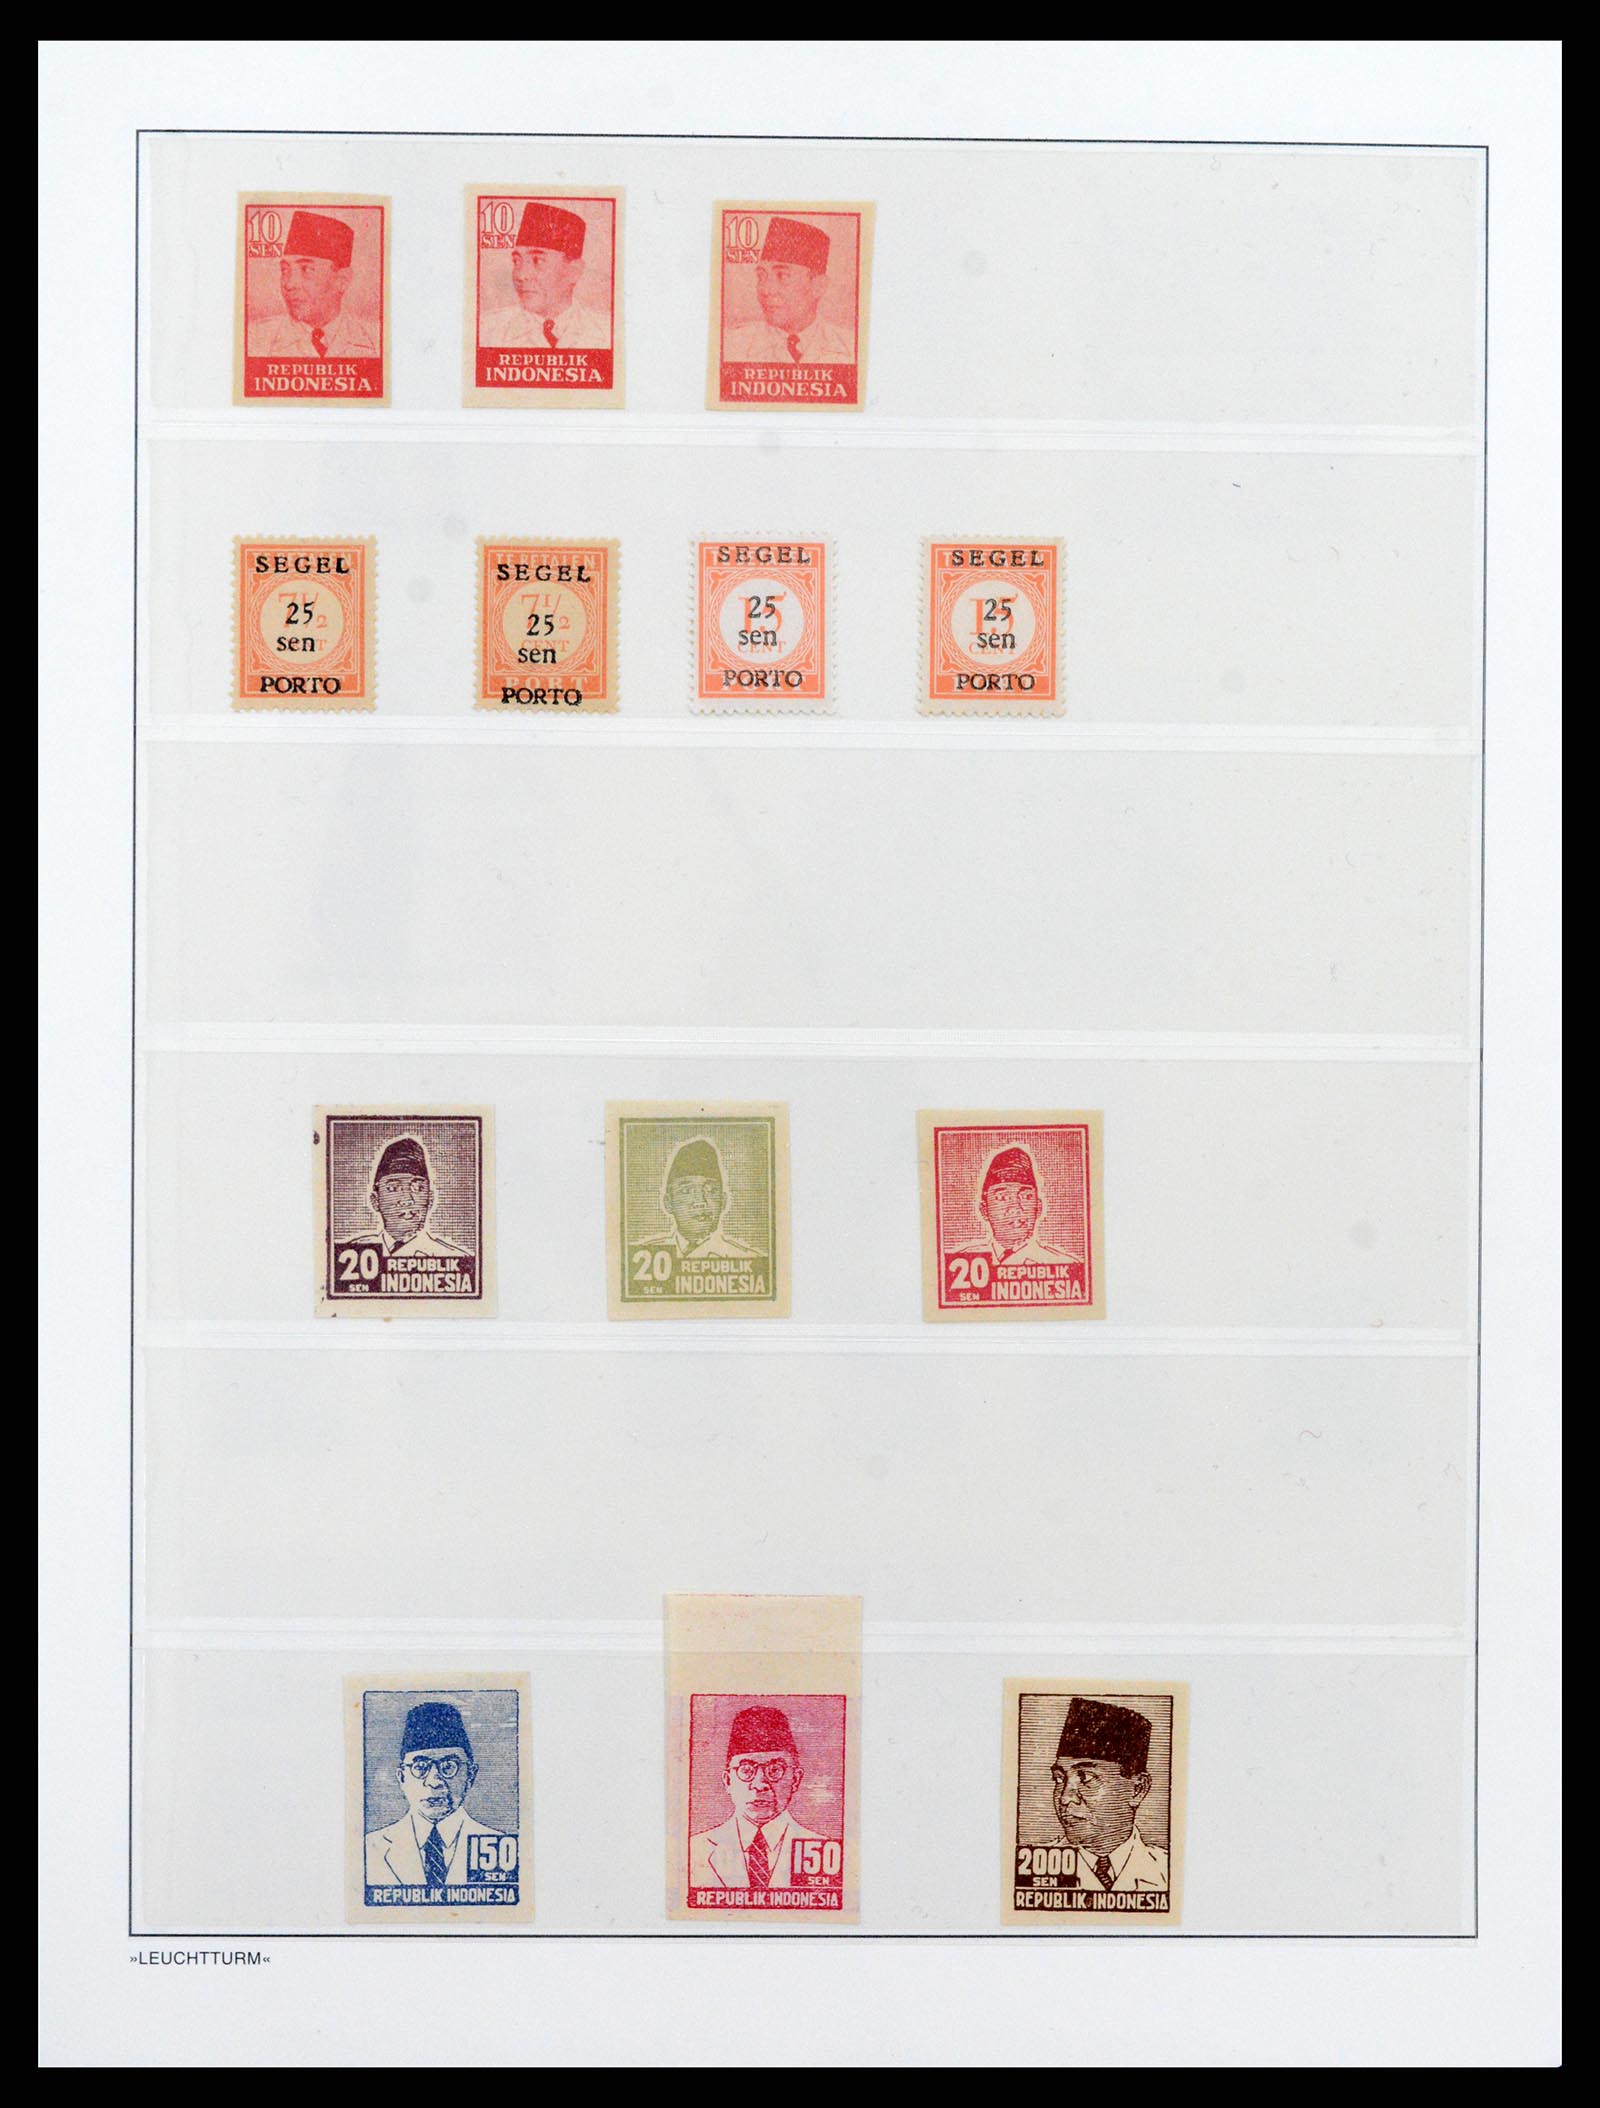 37435 037 - Stamp collection 37435 Indonesia interim period 1945-1948.